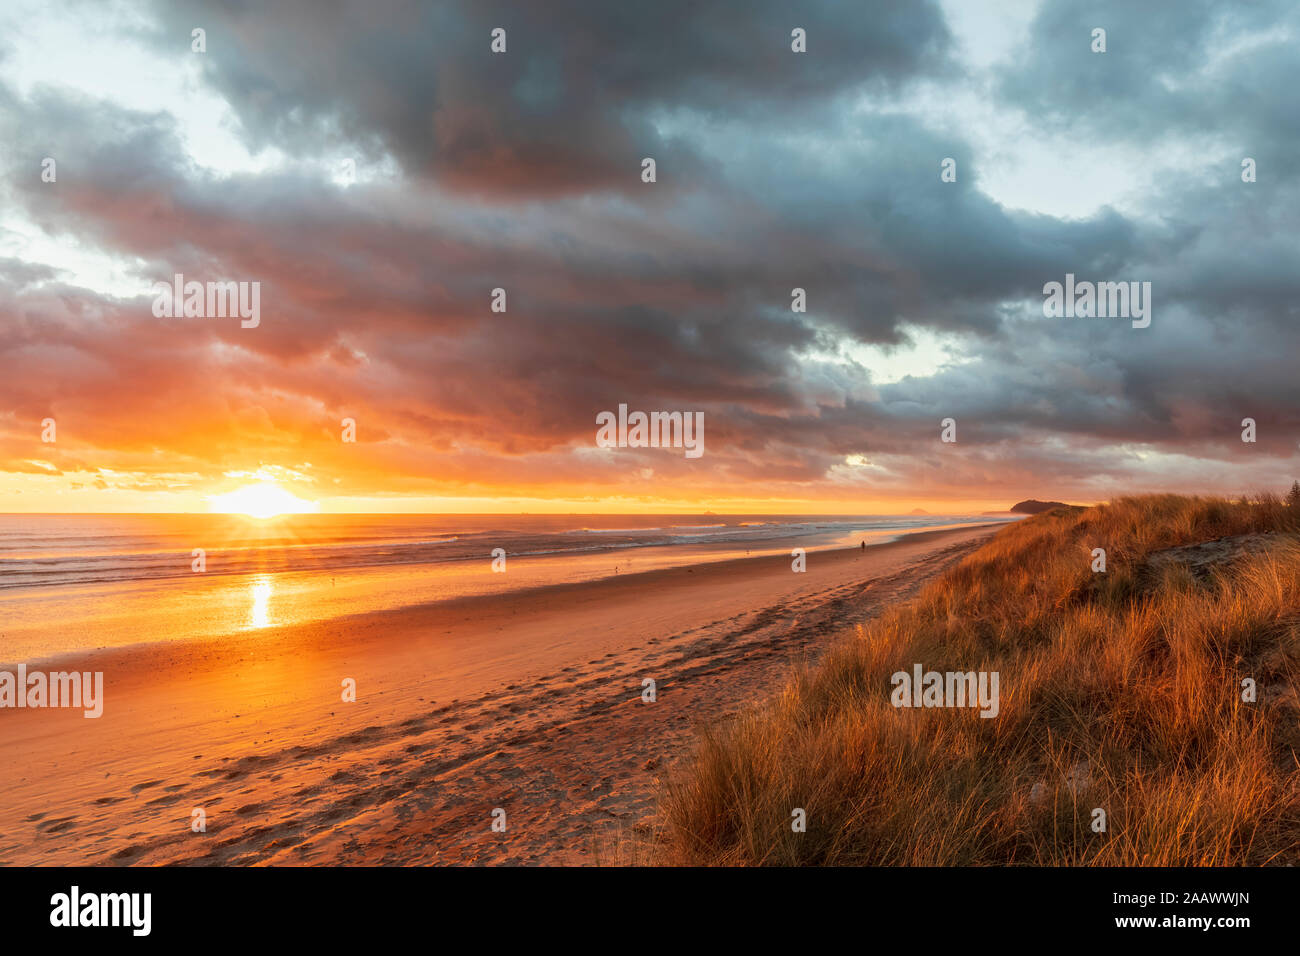 New Zealand, North Island, Waikato, Waihi Beach, scenic view of beach at sunset Stock Photo